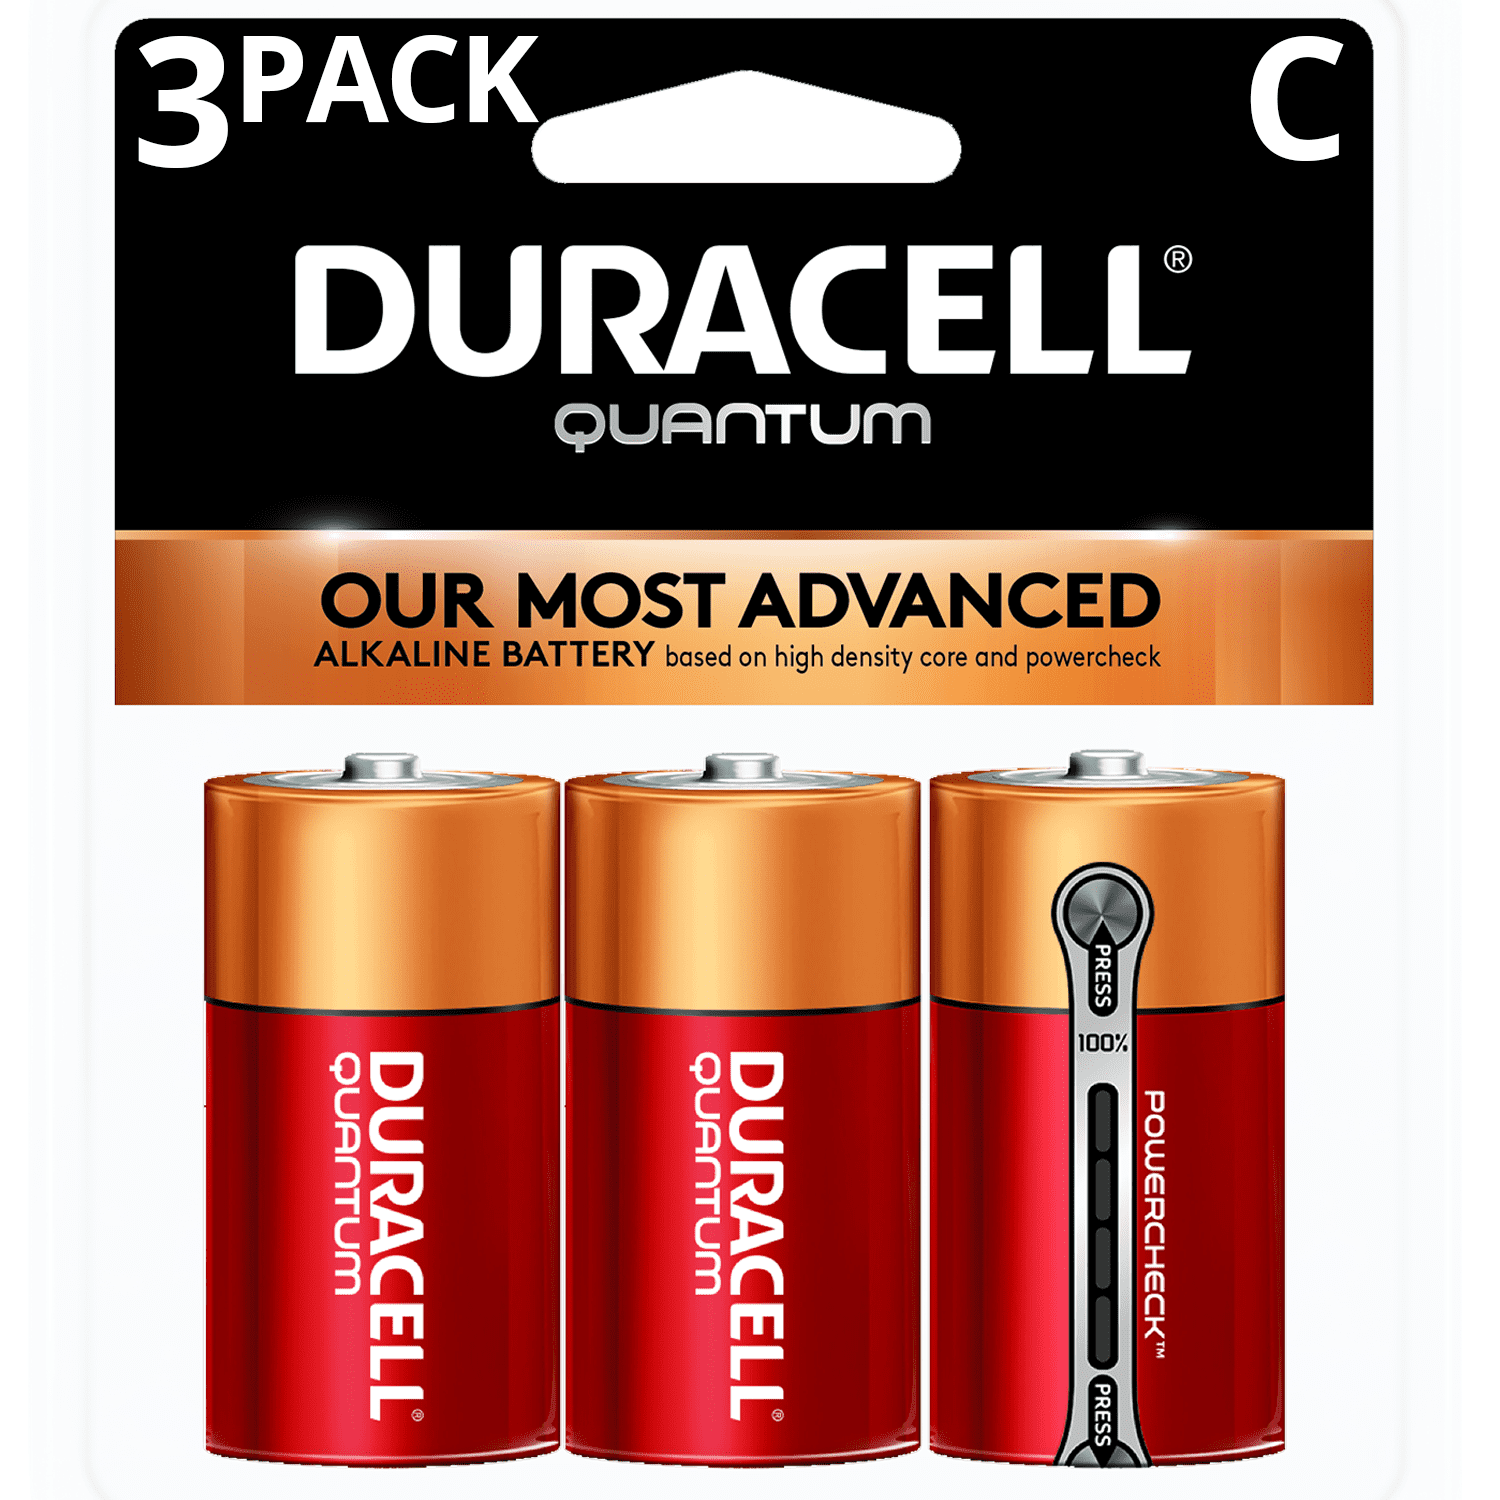 duracell-1-5v-quantum-alkaline-c-batteries-with-powercheck-3-pack